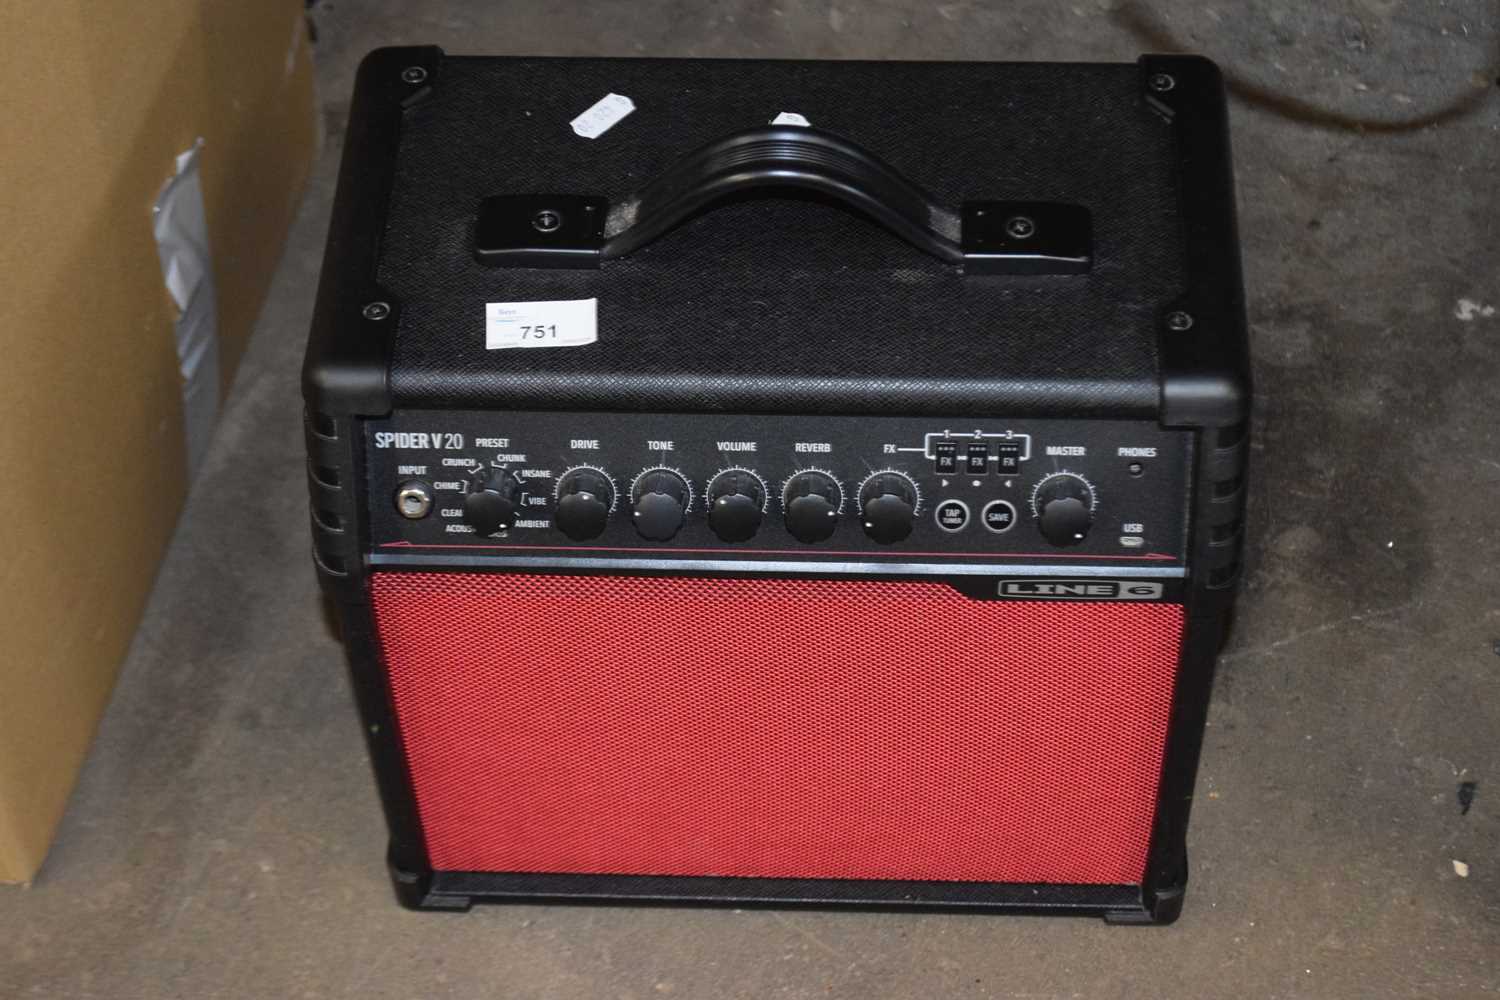 A Spider V20 portable amplifier